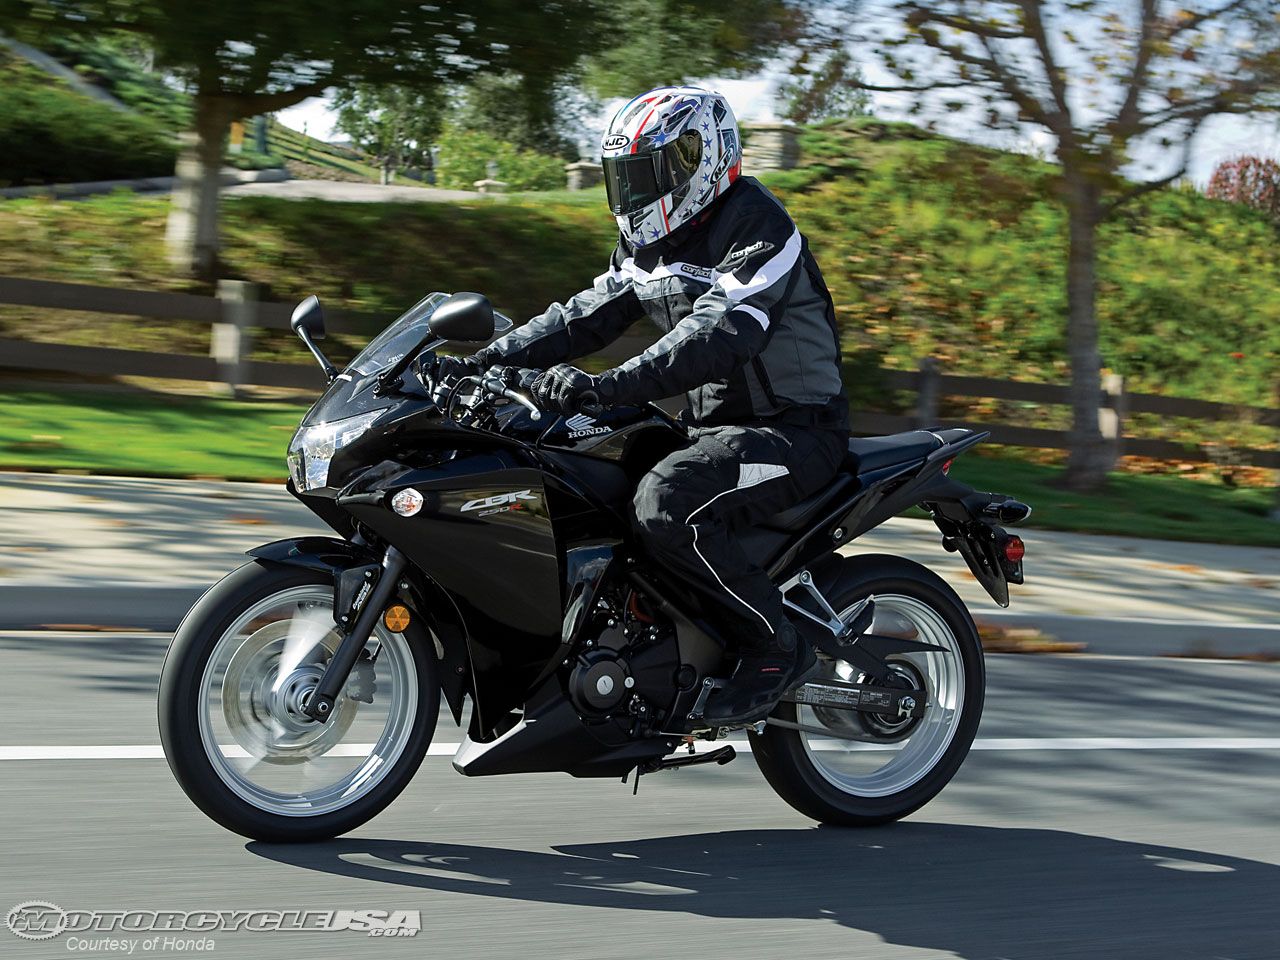 Тест-драйв мотоцикла Honda VFR1200FD